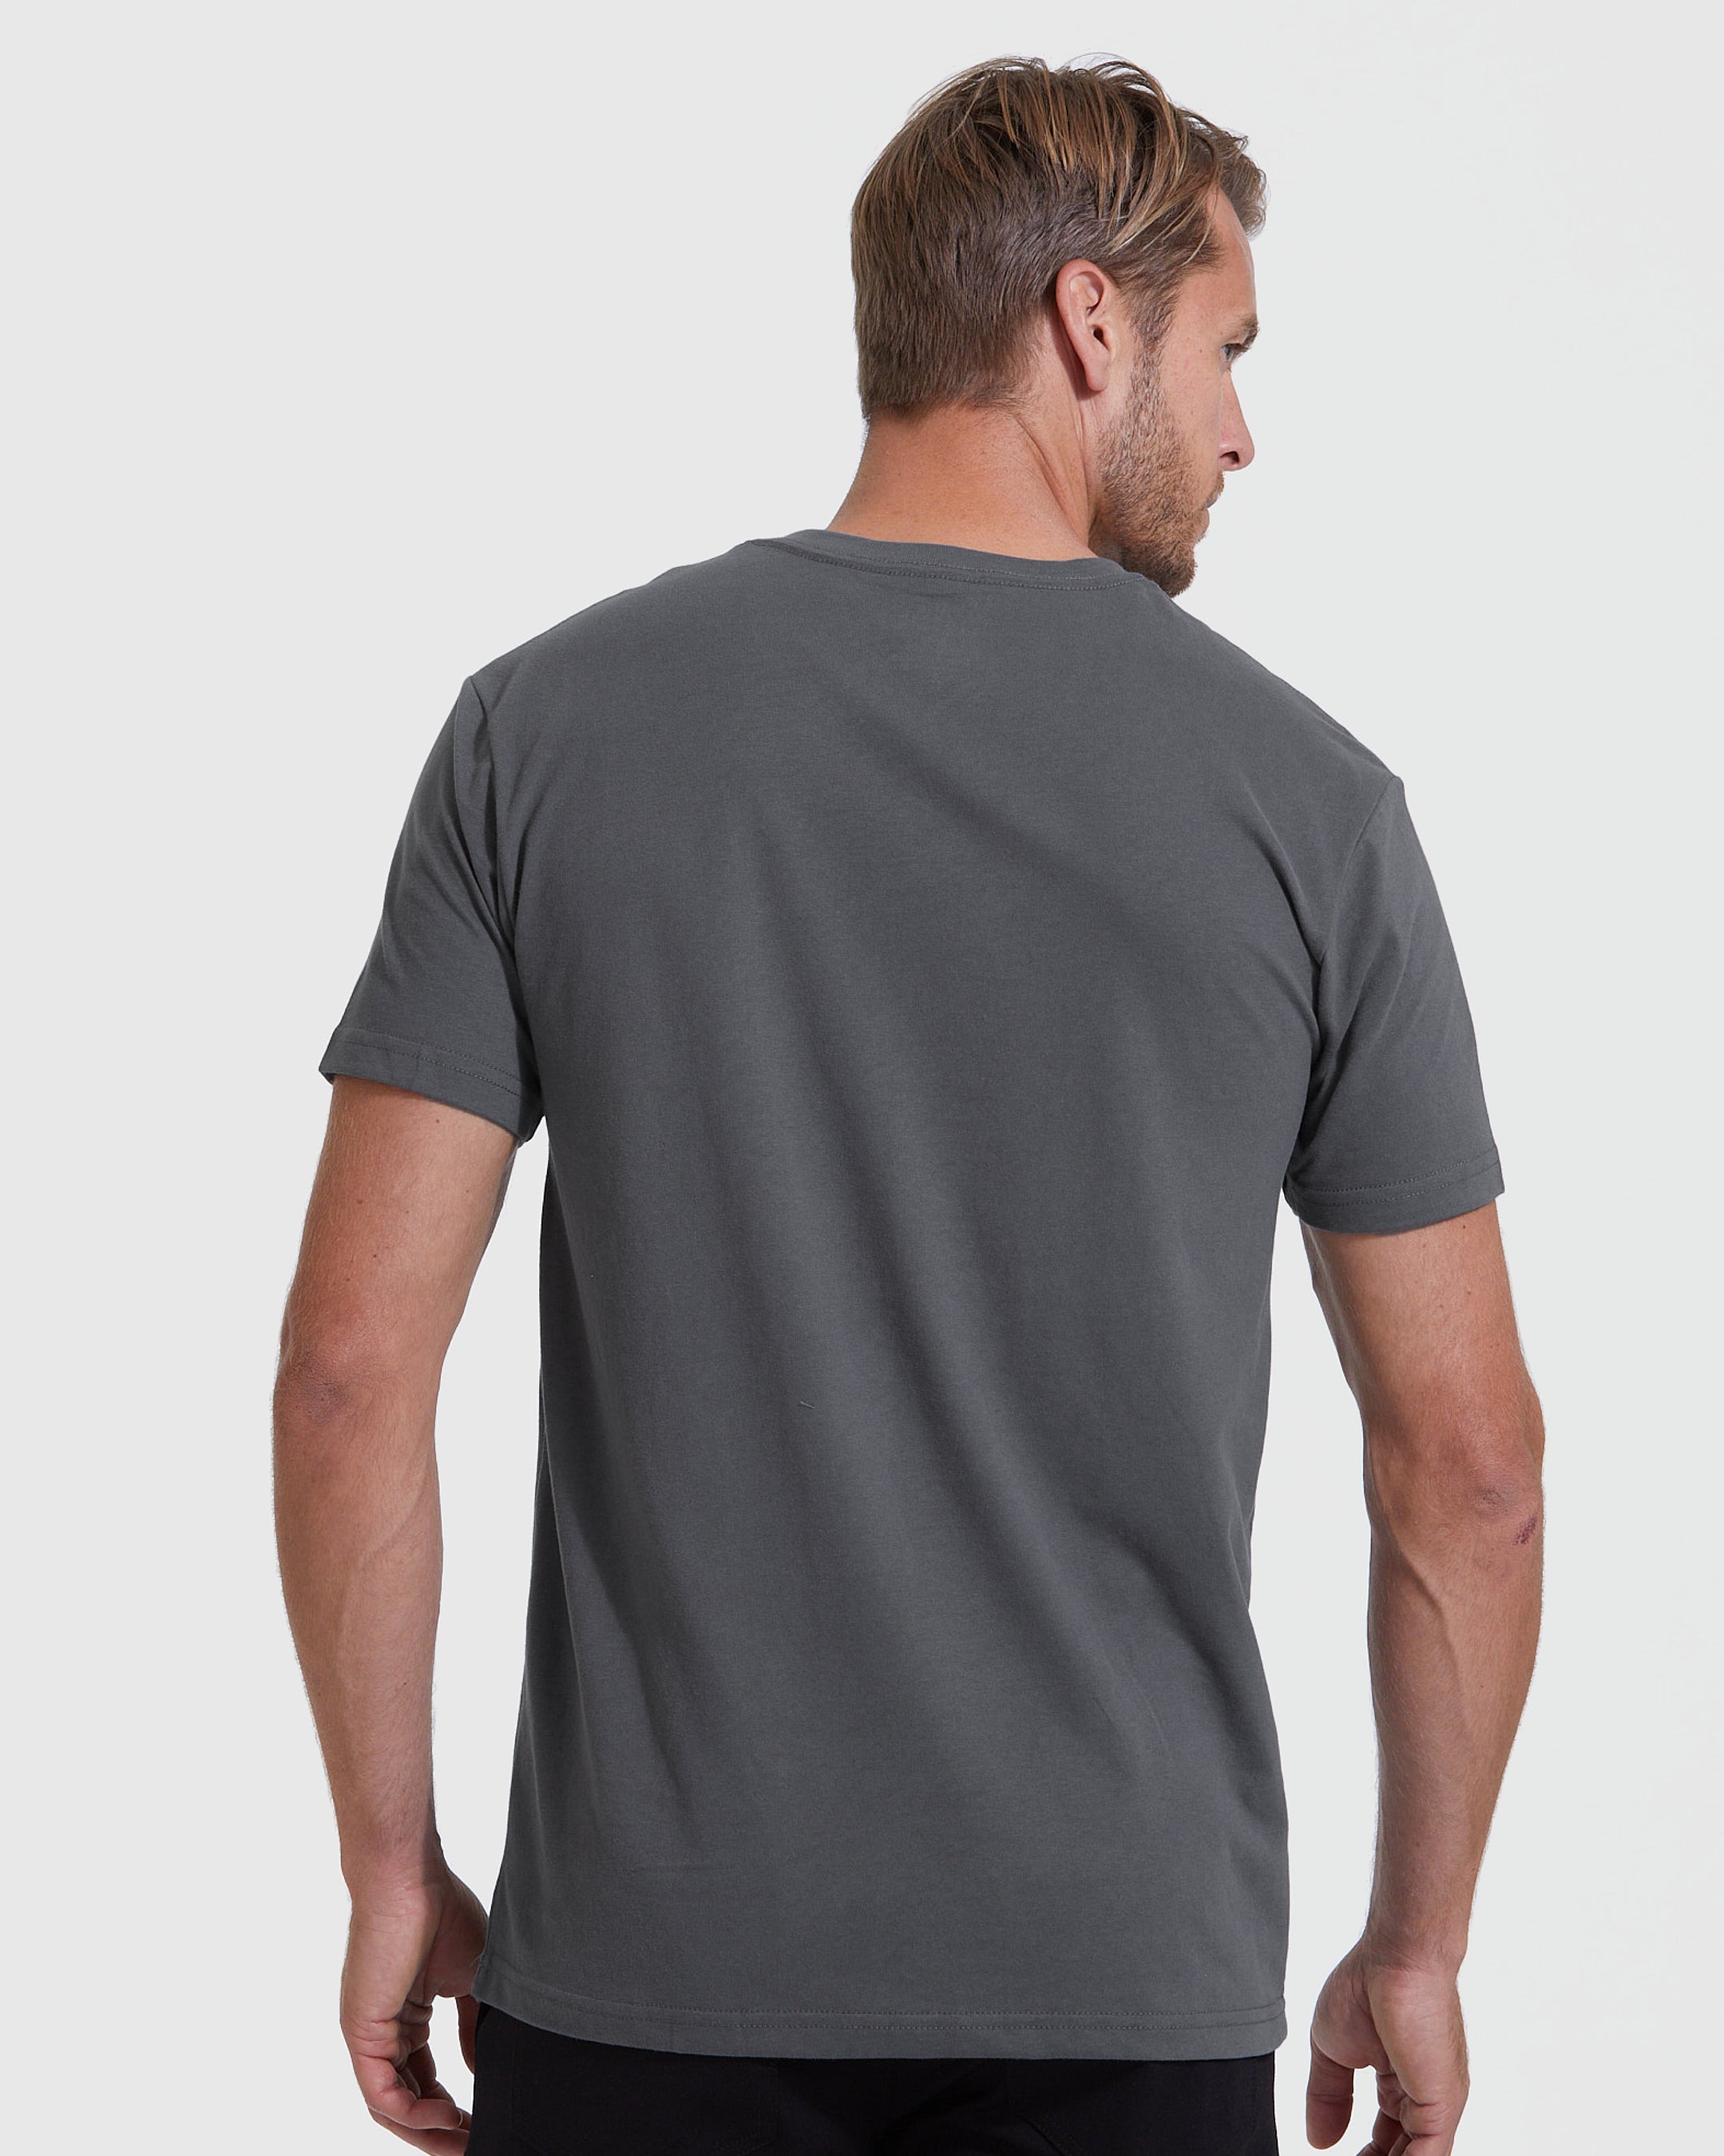 Carbon – Classic T-Shirt V-Neck True